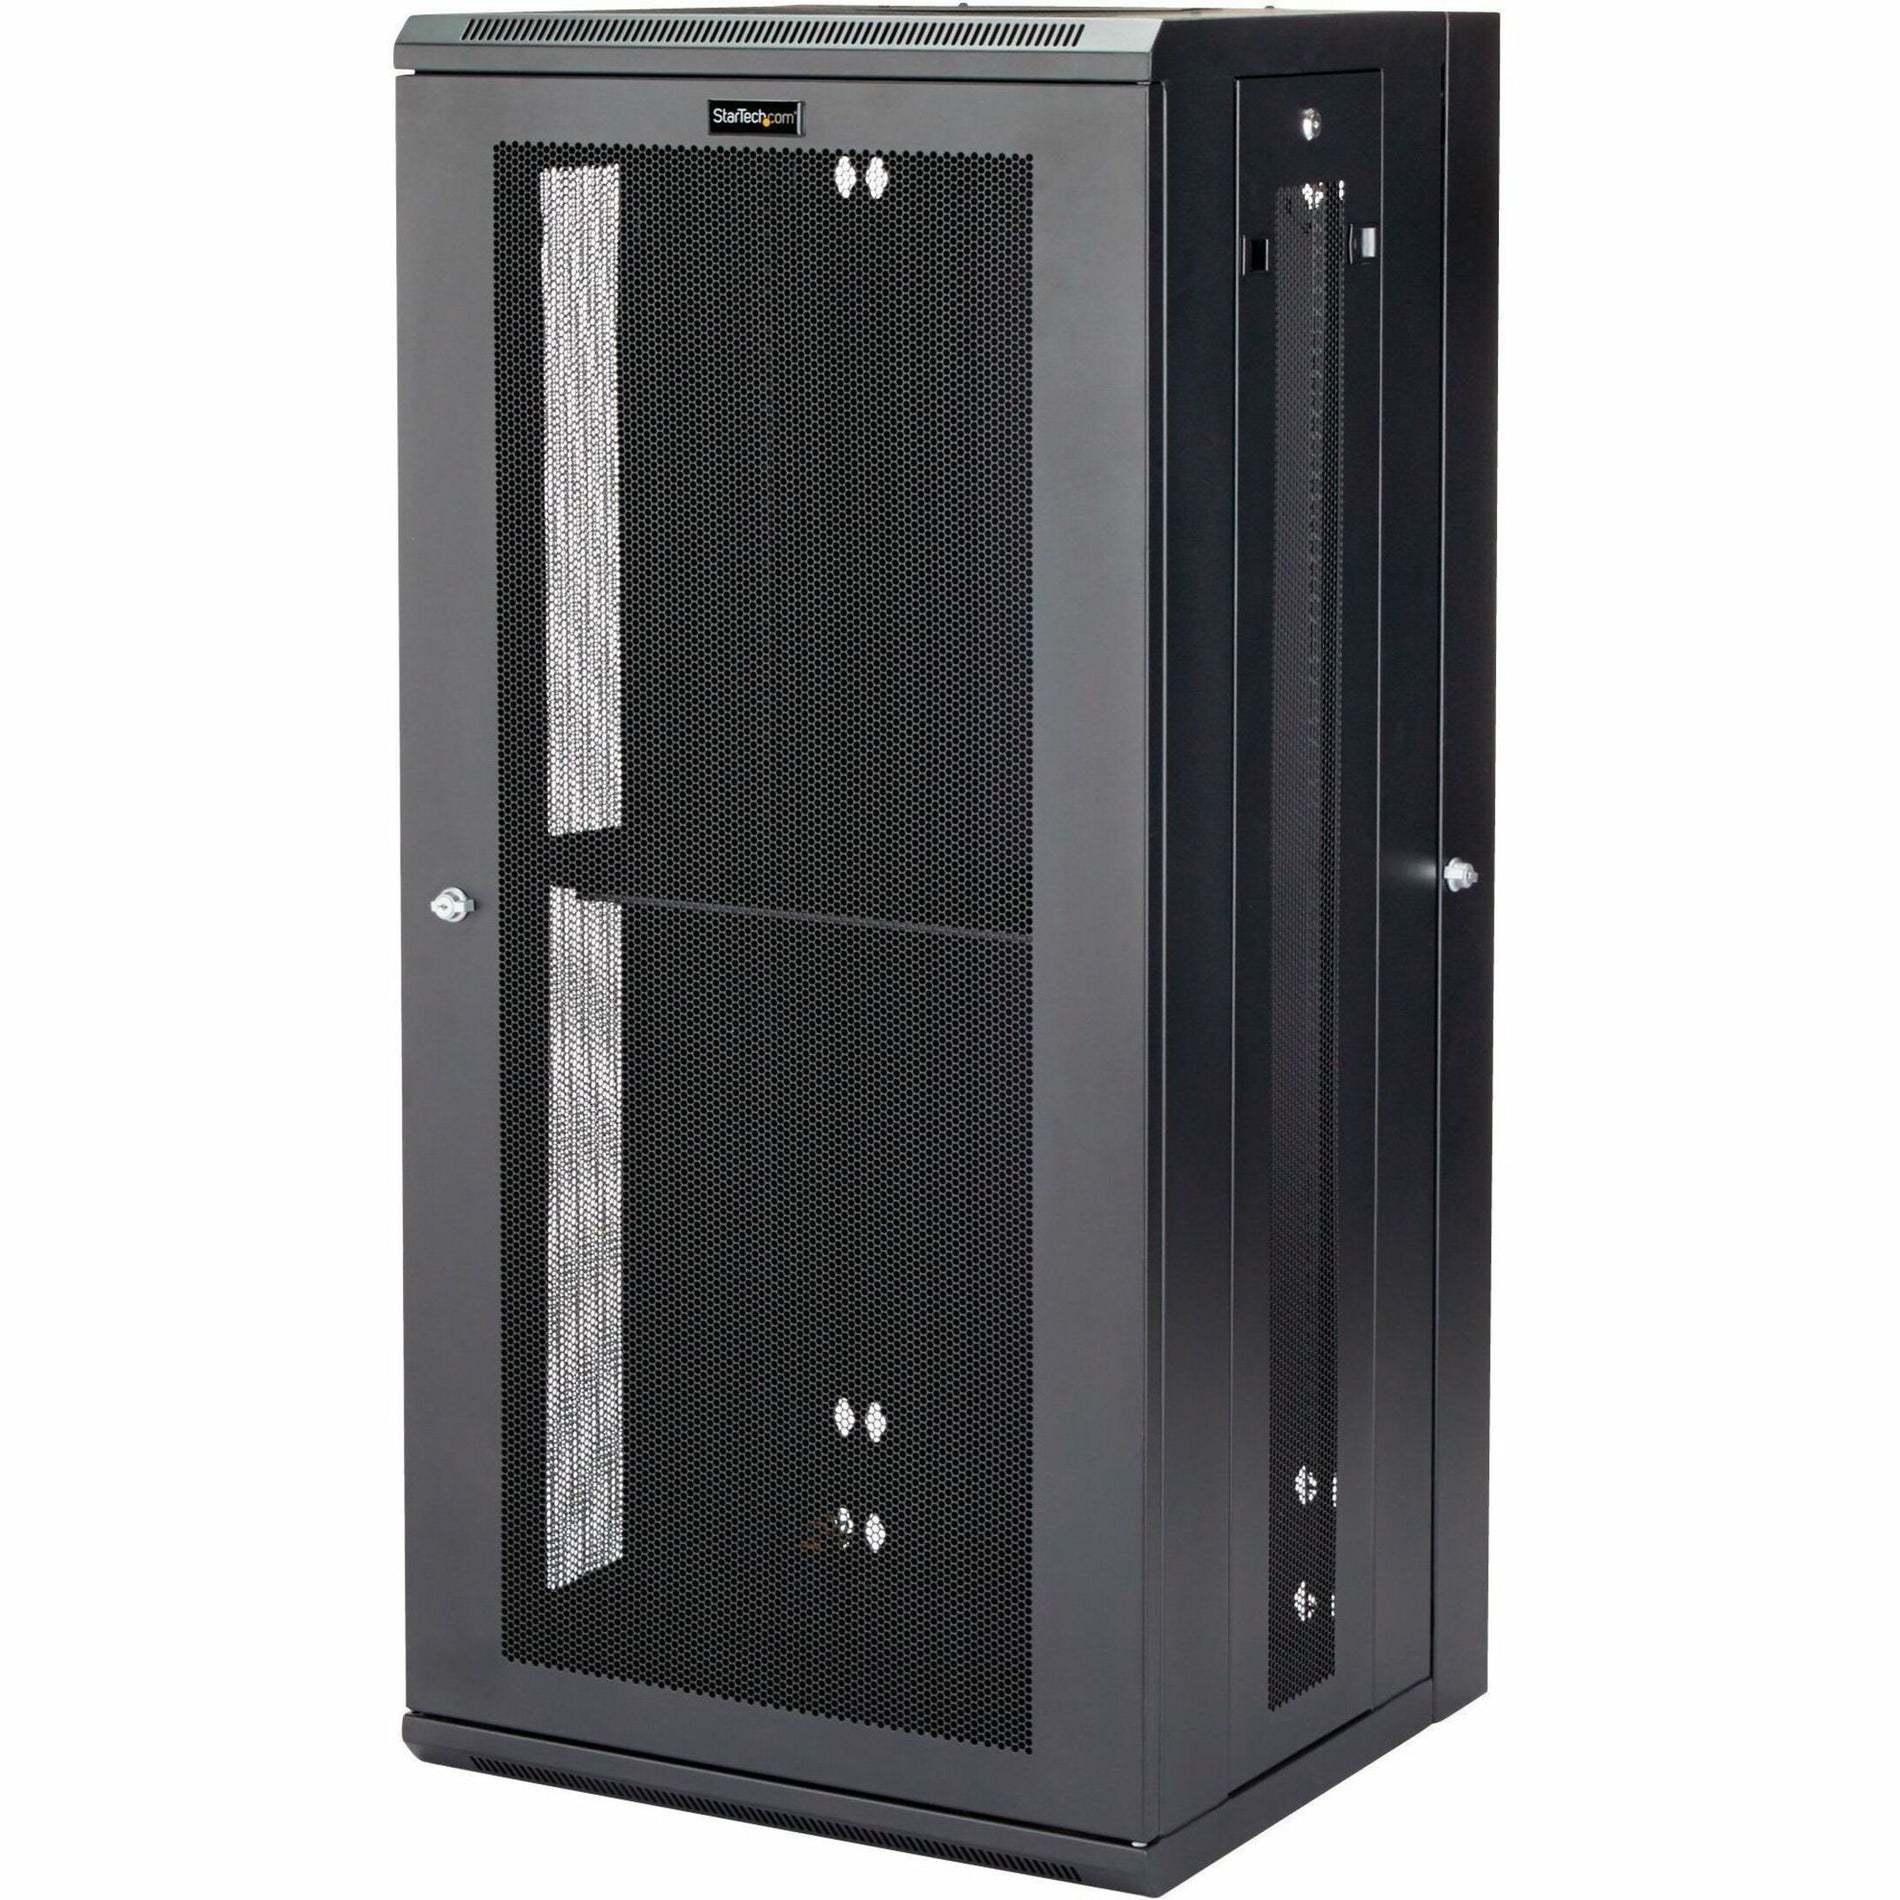 StarTech.com RK2620WALHM 26U Wall-Mount Server Rack Cabinet - Hinged, 20 in. Deep, Black